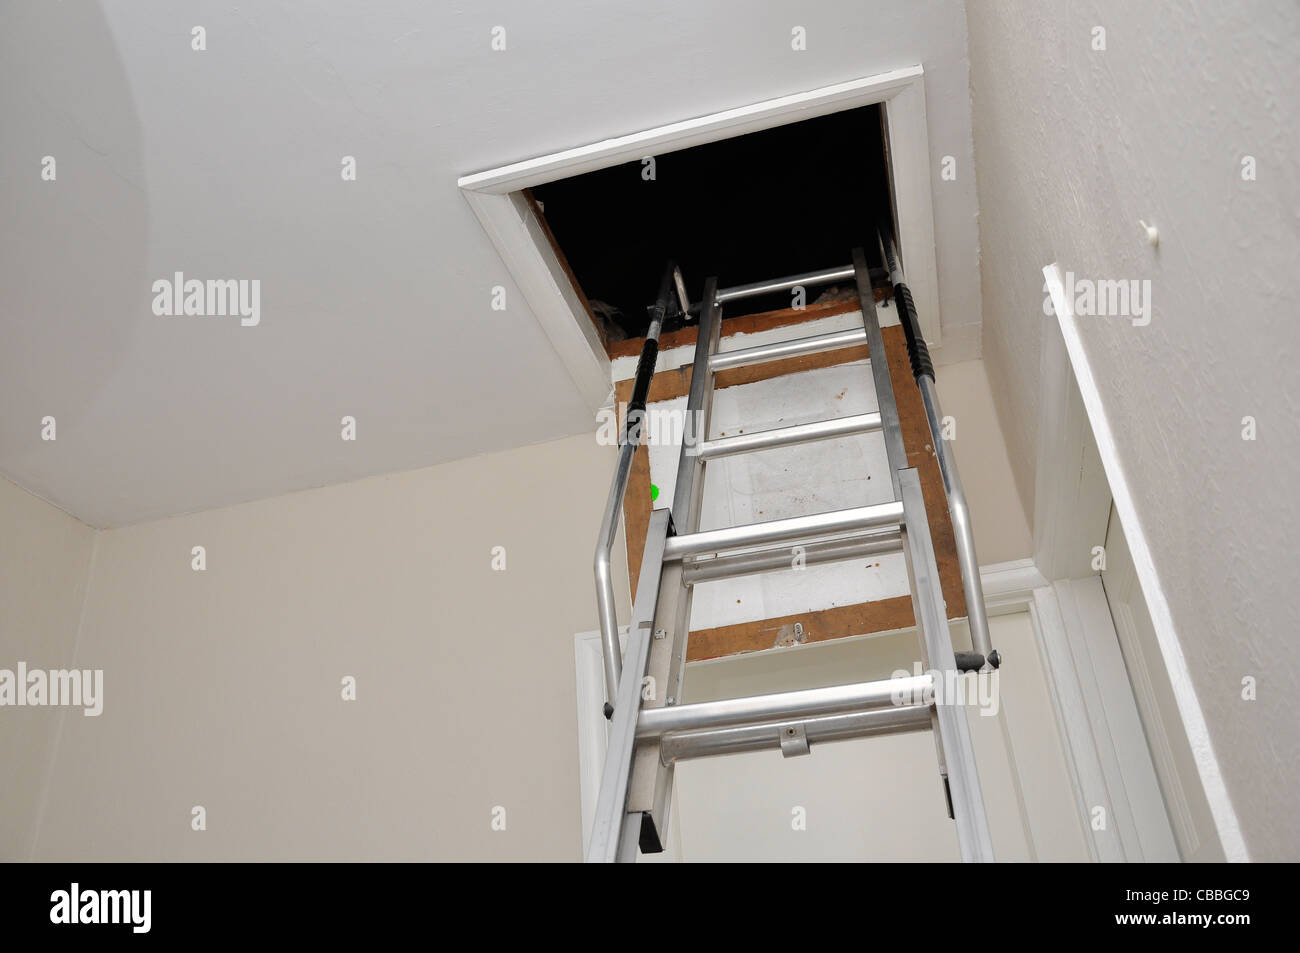 Loft ladder hatch access Stock Photo - Alamy